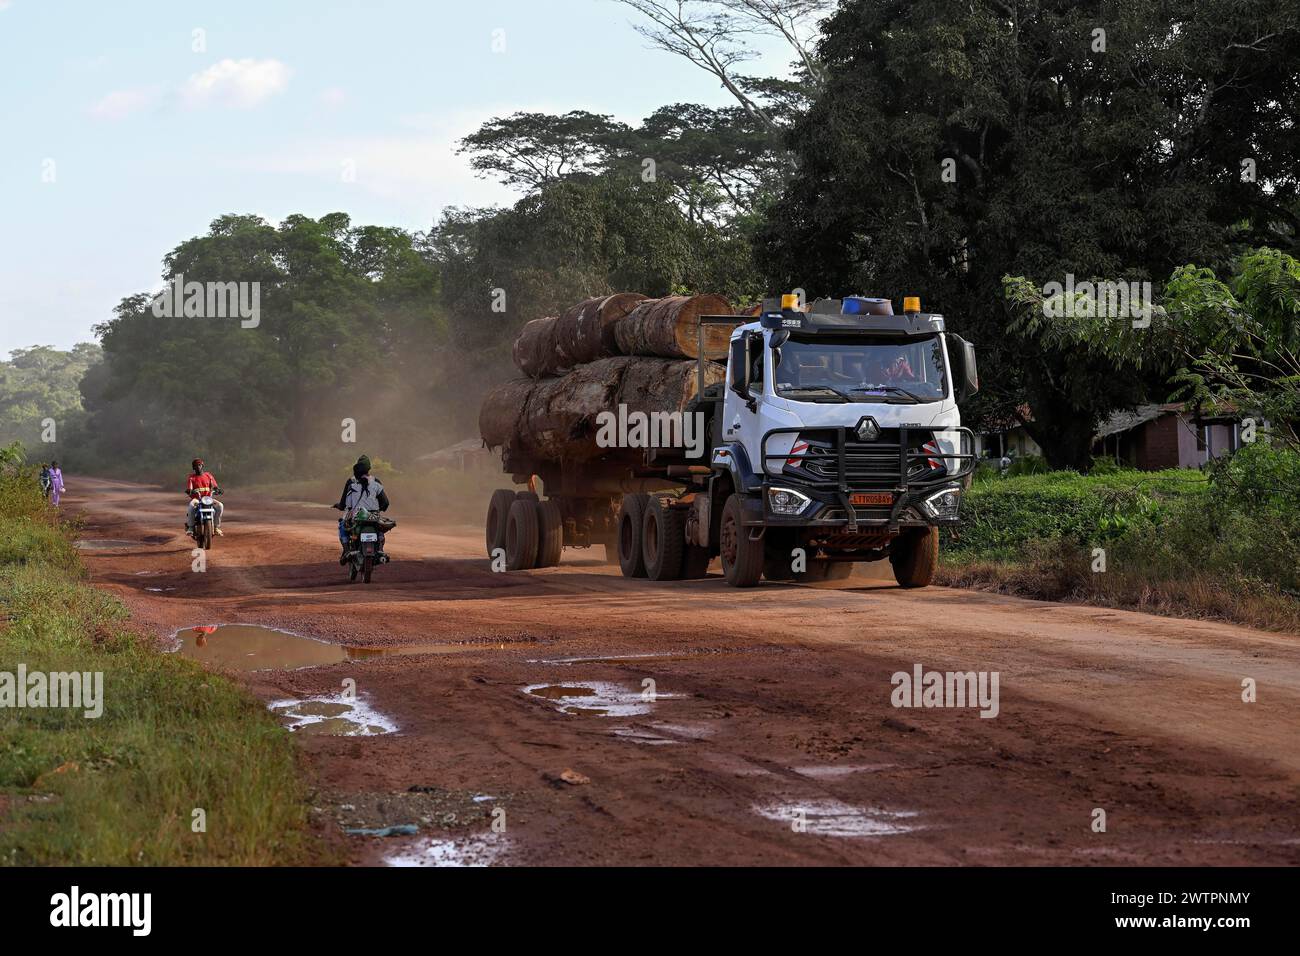 Lastkraftwagen mit Tropenholz aus dem Kongo-Becken, in der Nähe von Yokadouma, Bezirk Boumba-et-Ngoko, Region Est, Kamerun, Afrika Stockfoto